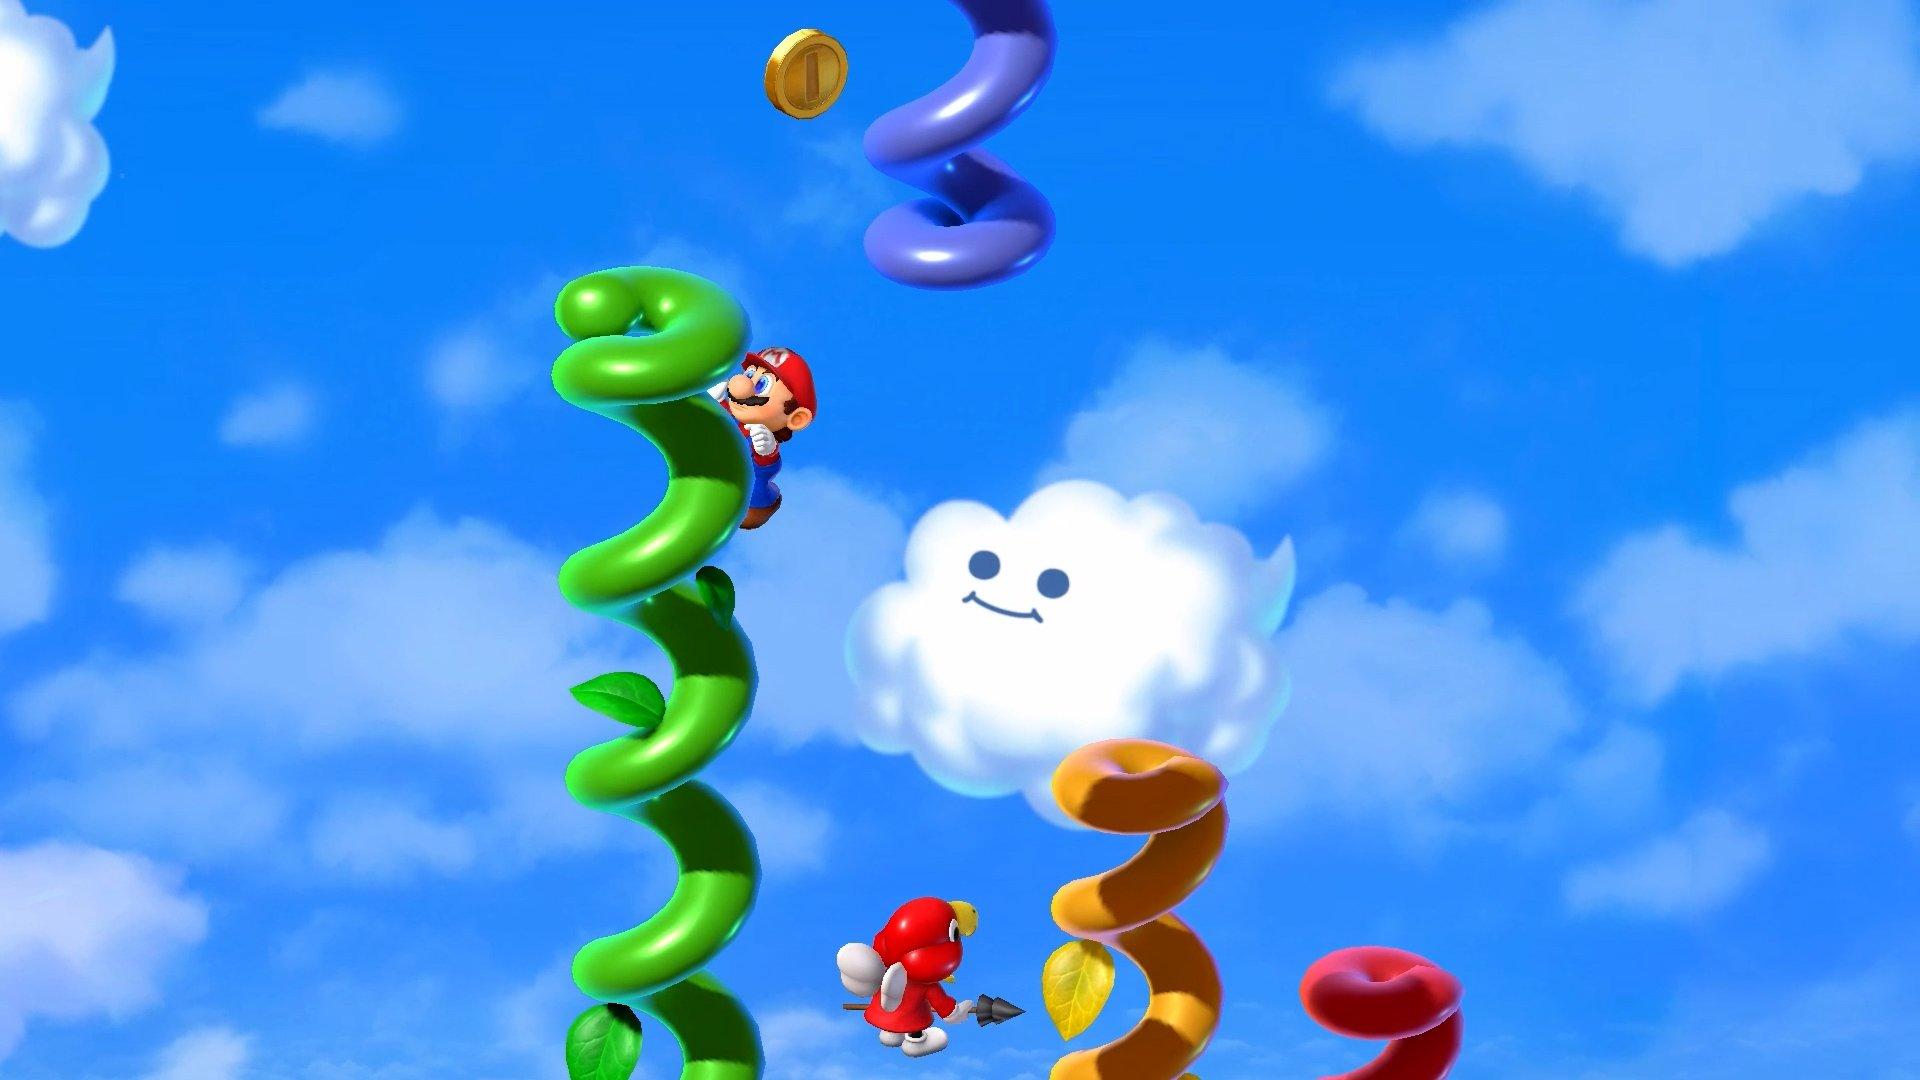 Jeu Super Mario RPG - Nintendo Switch